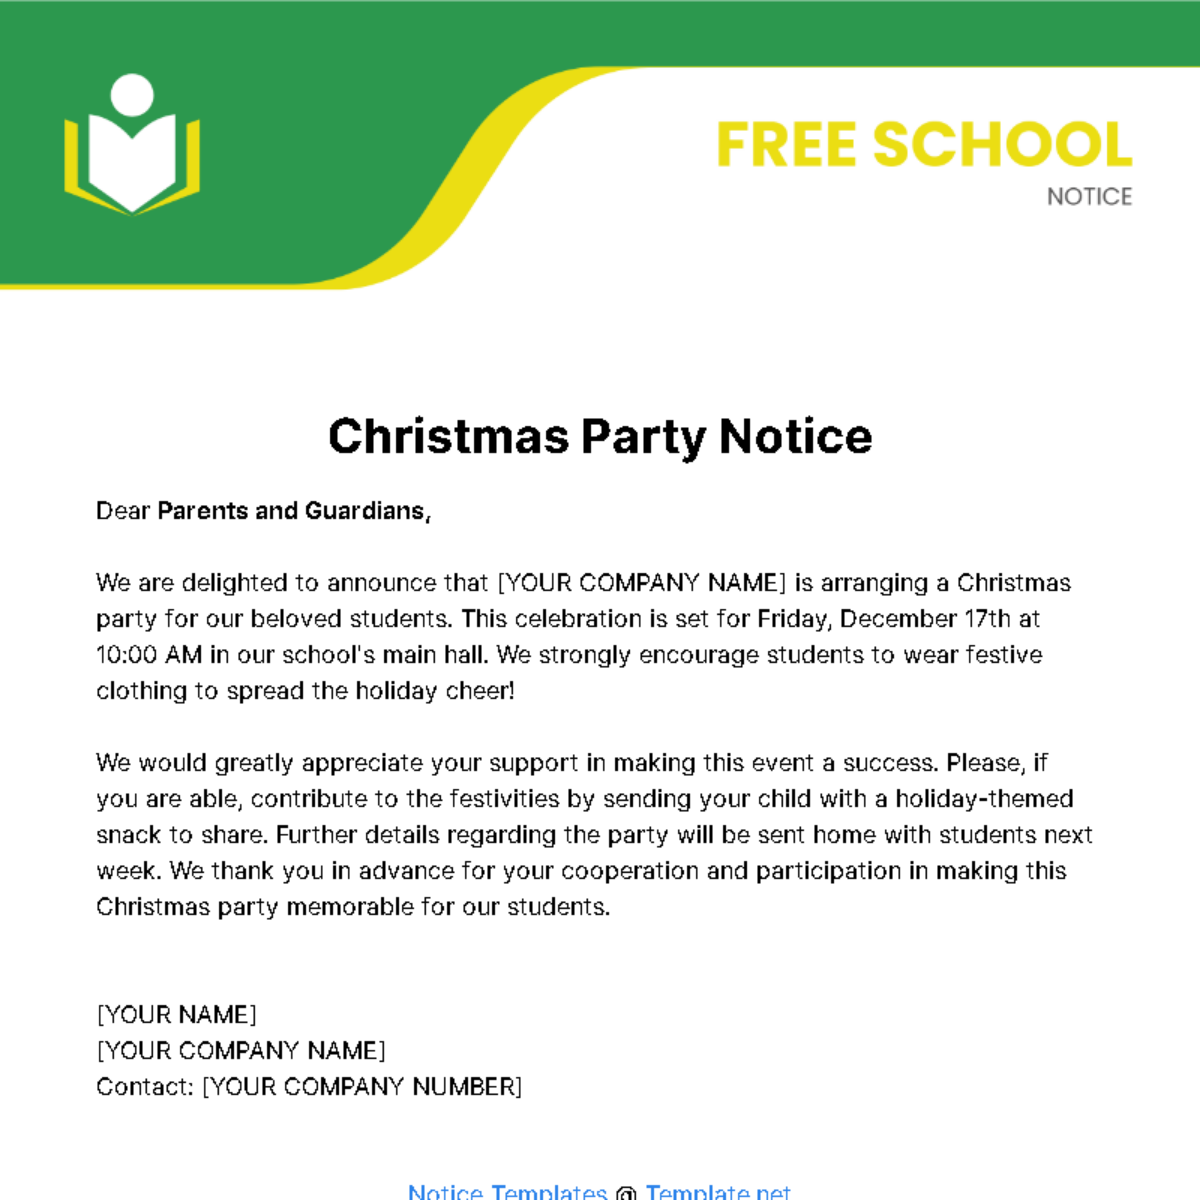 Free School Notice Template